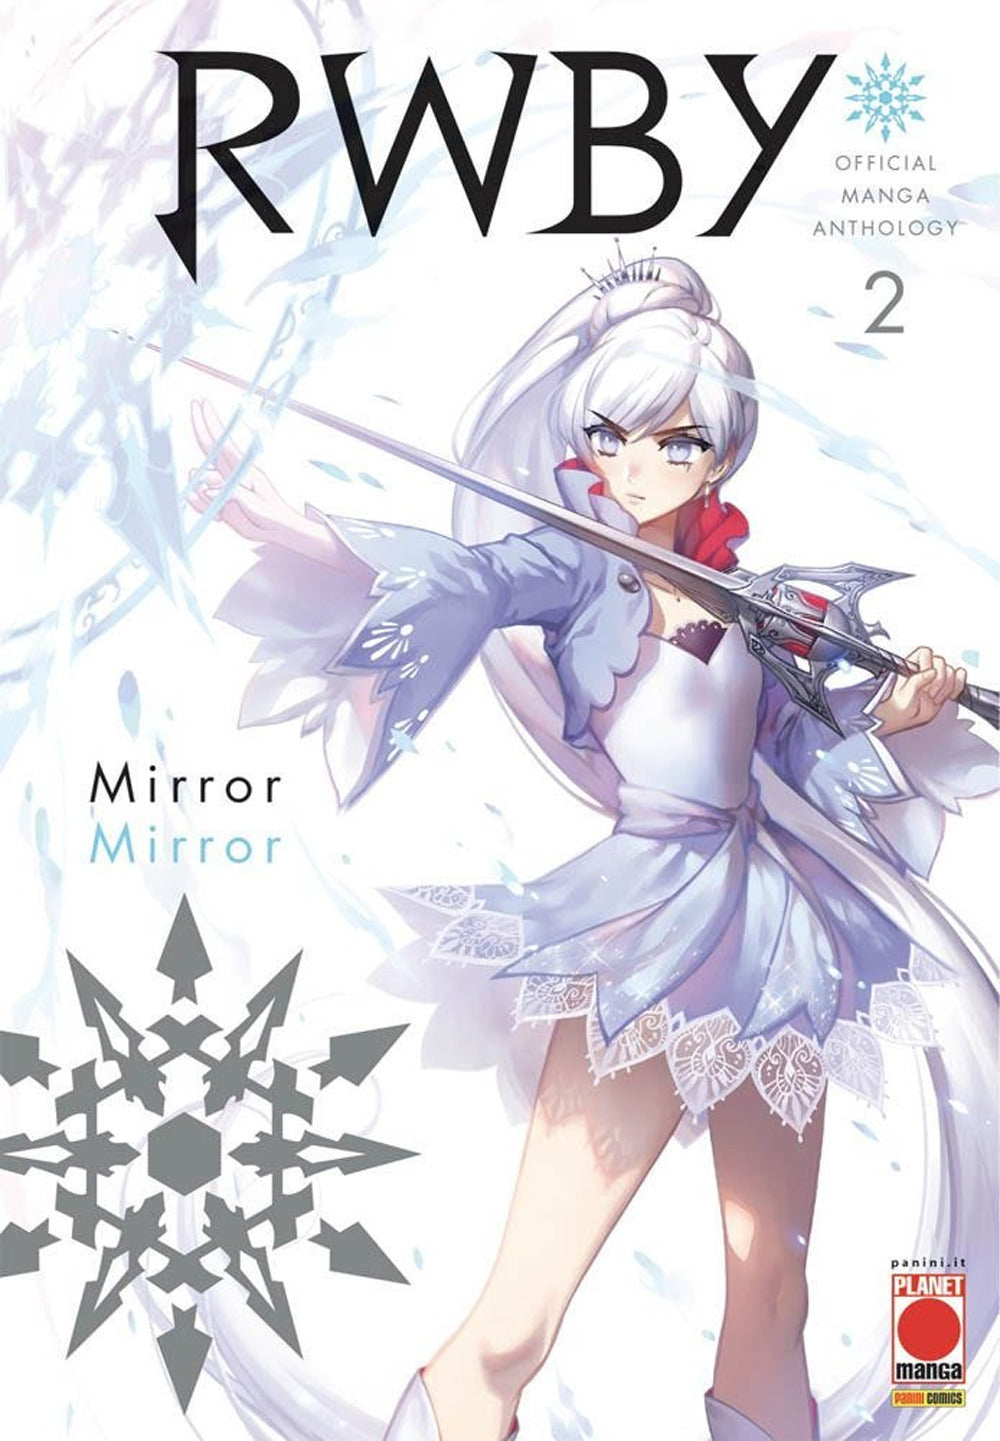 RWBY. Official manga anthology. Vol. 2: Mirror mirror.